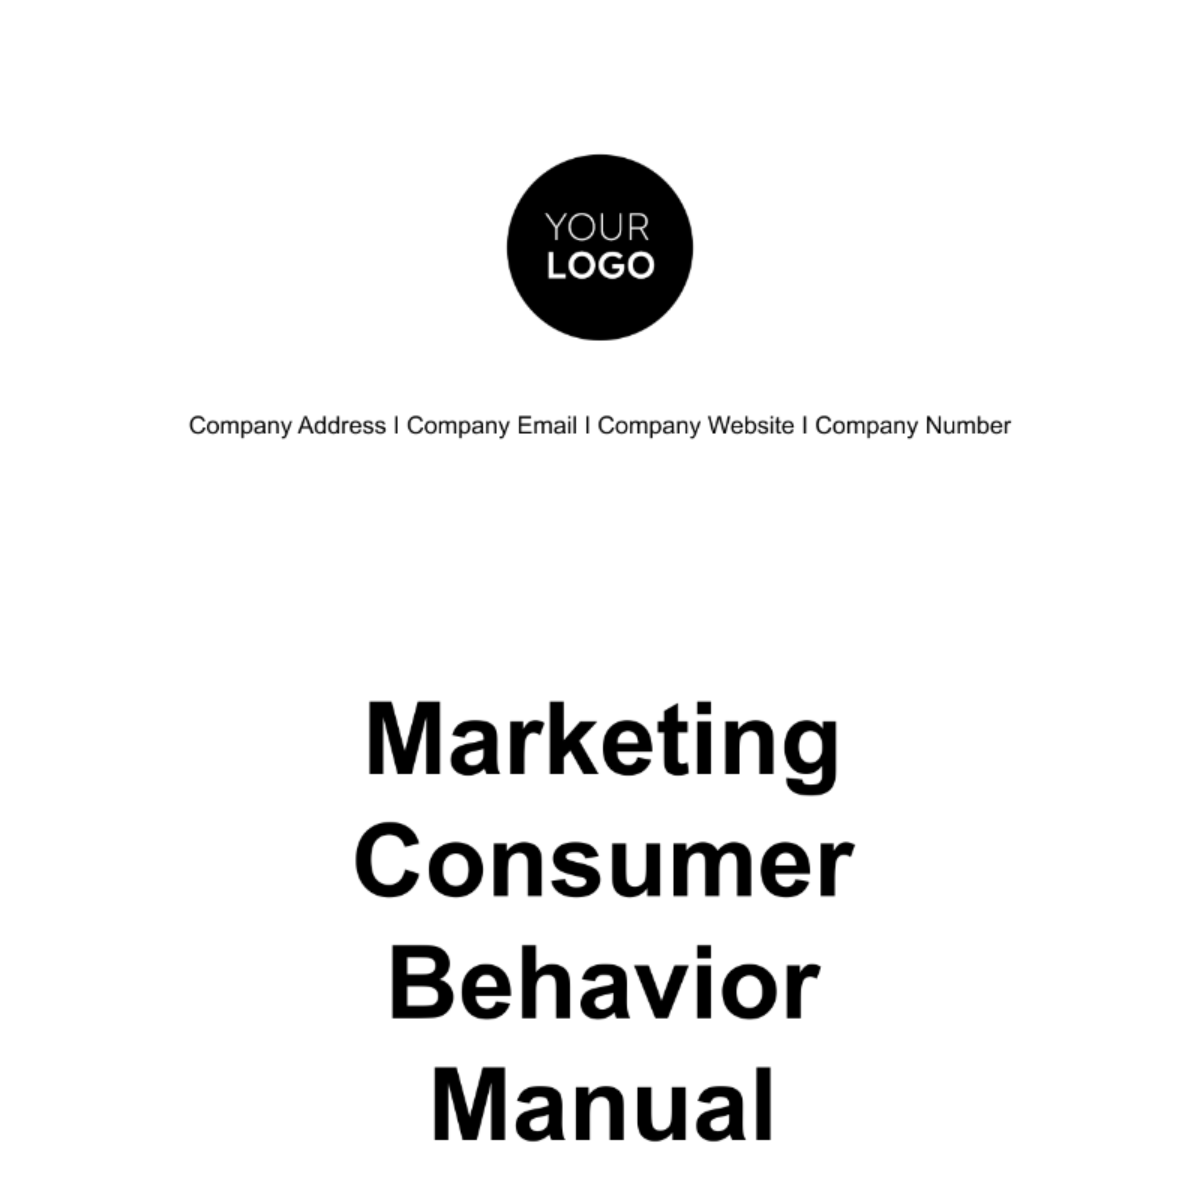 Marketing Consumer Behavior Manual Template